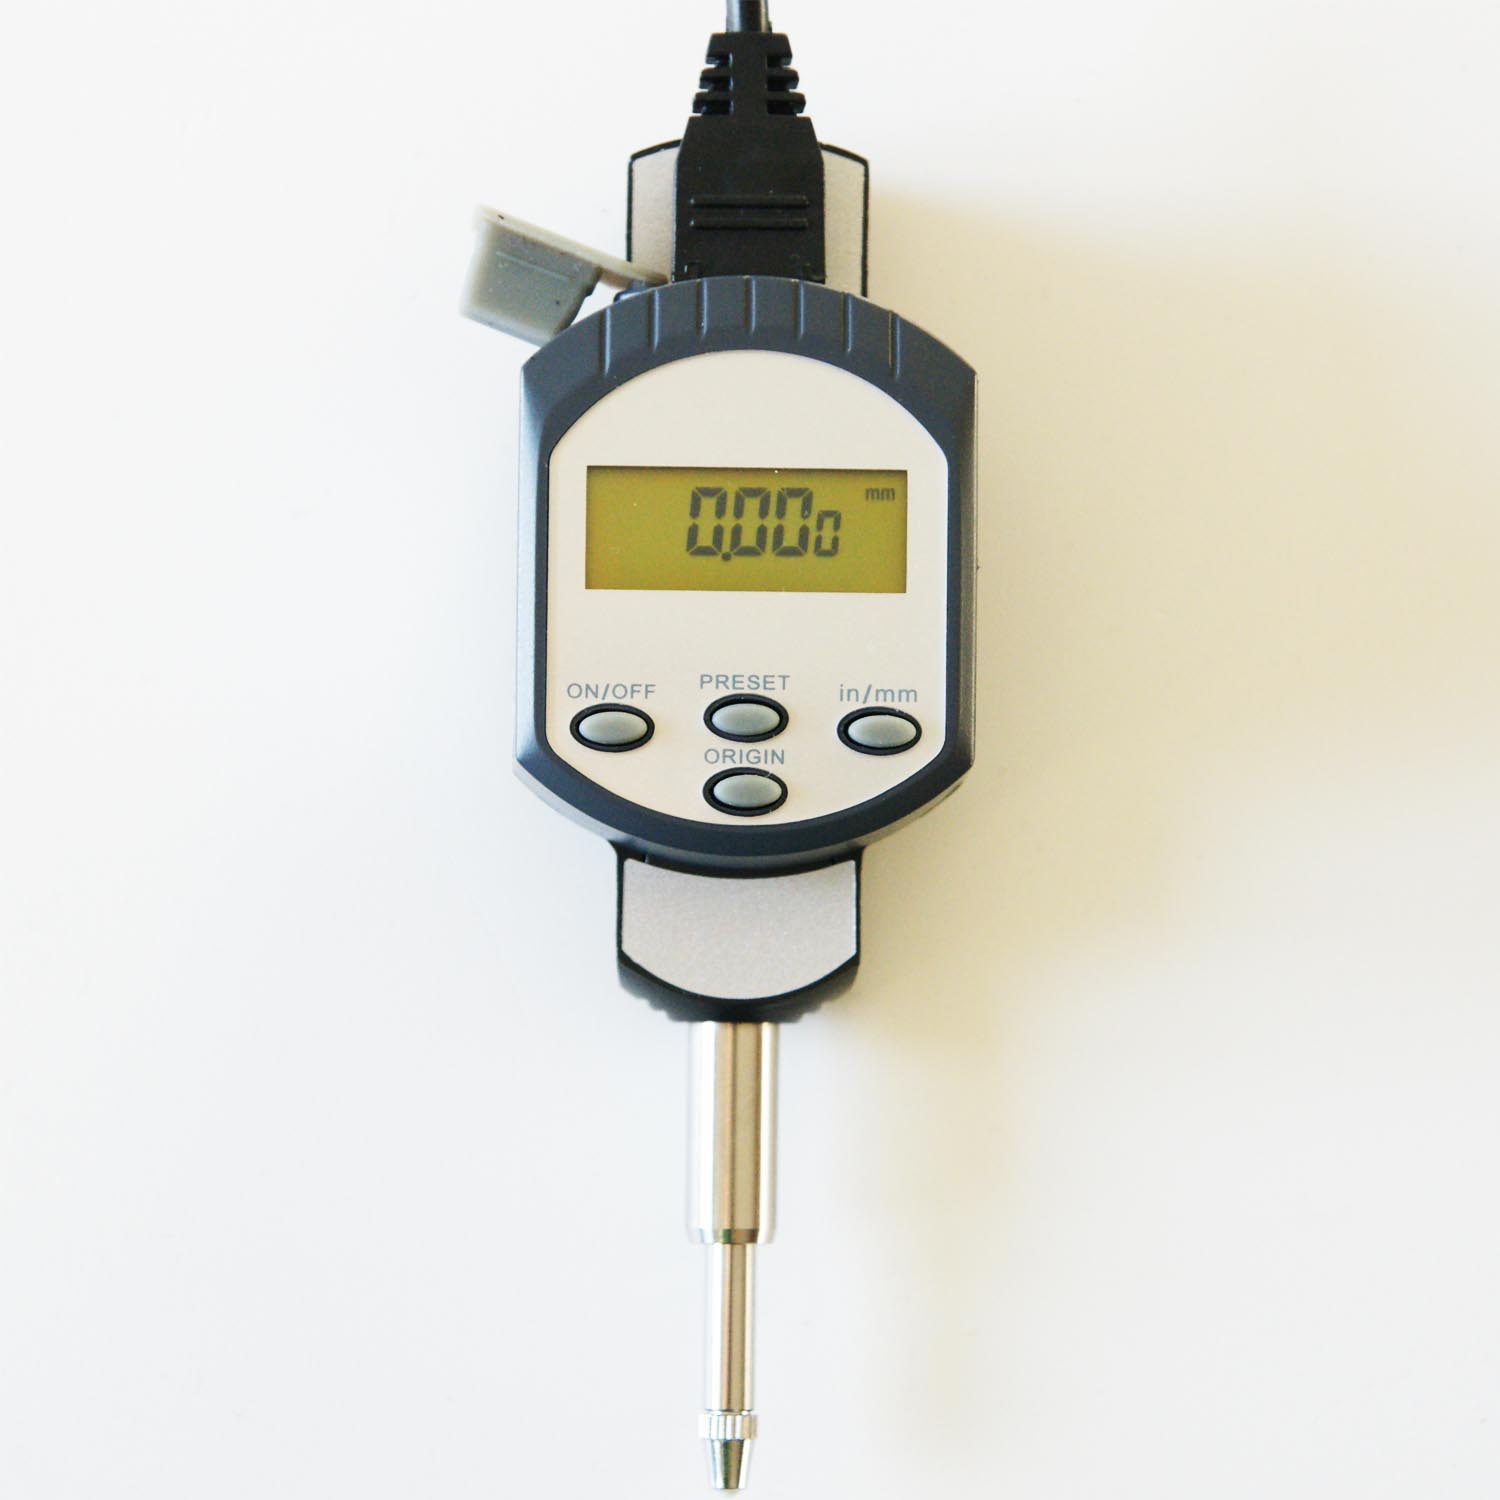 6x Dial Digital Test Indicator Messuhr Kontakt Punkt Stängel Tiefenmesser DIY 